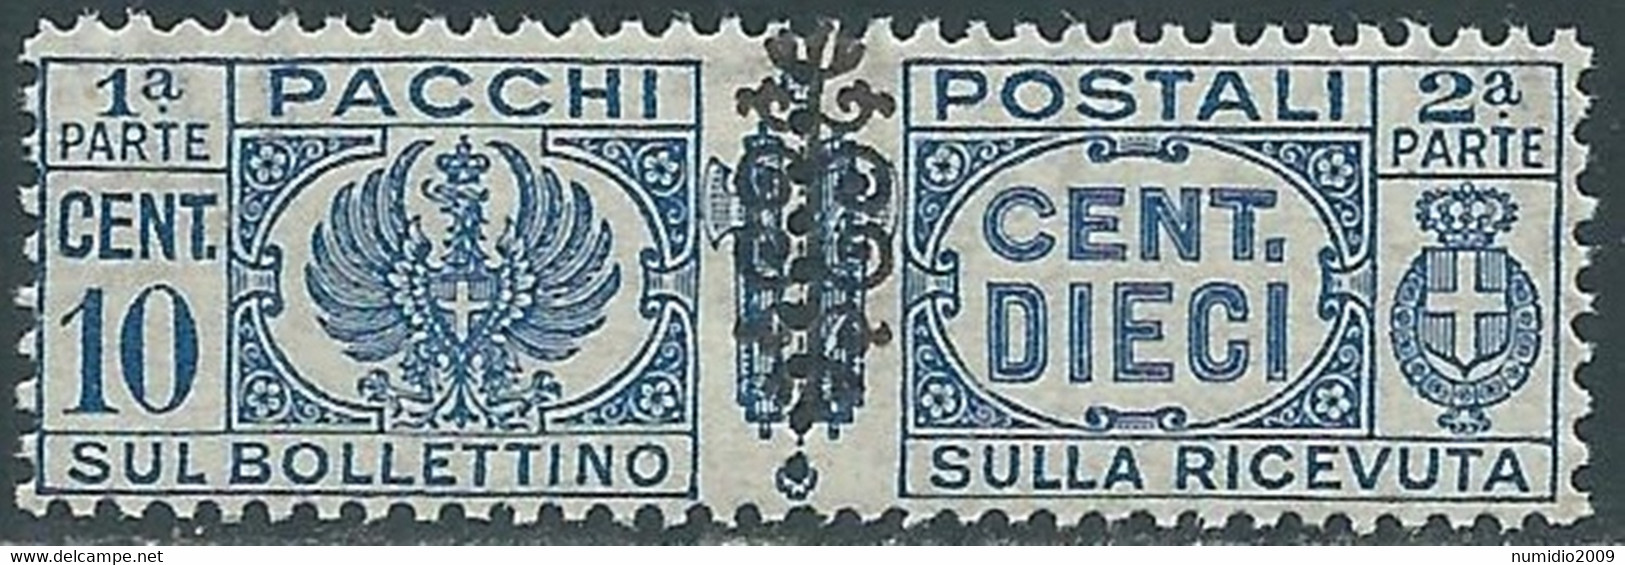 1945 LUOGOTENENZA PACCHI POSTALI 10 CENT MNH ** - CZ19-2 - Colis-postaux